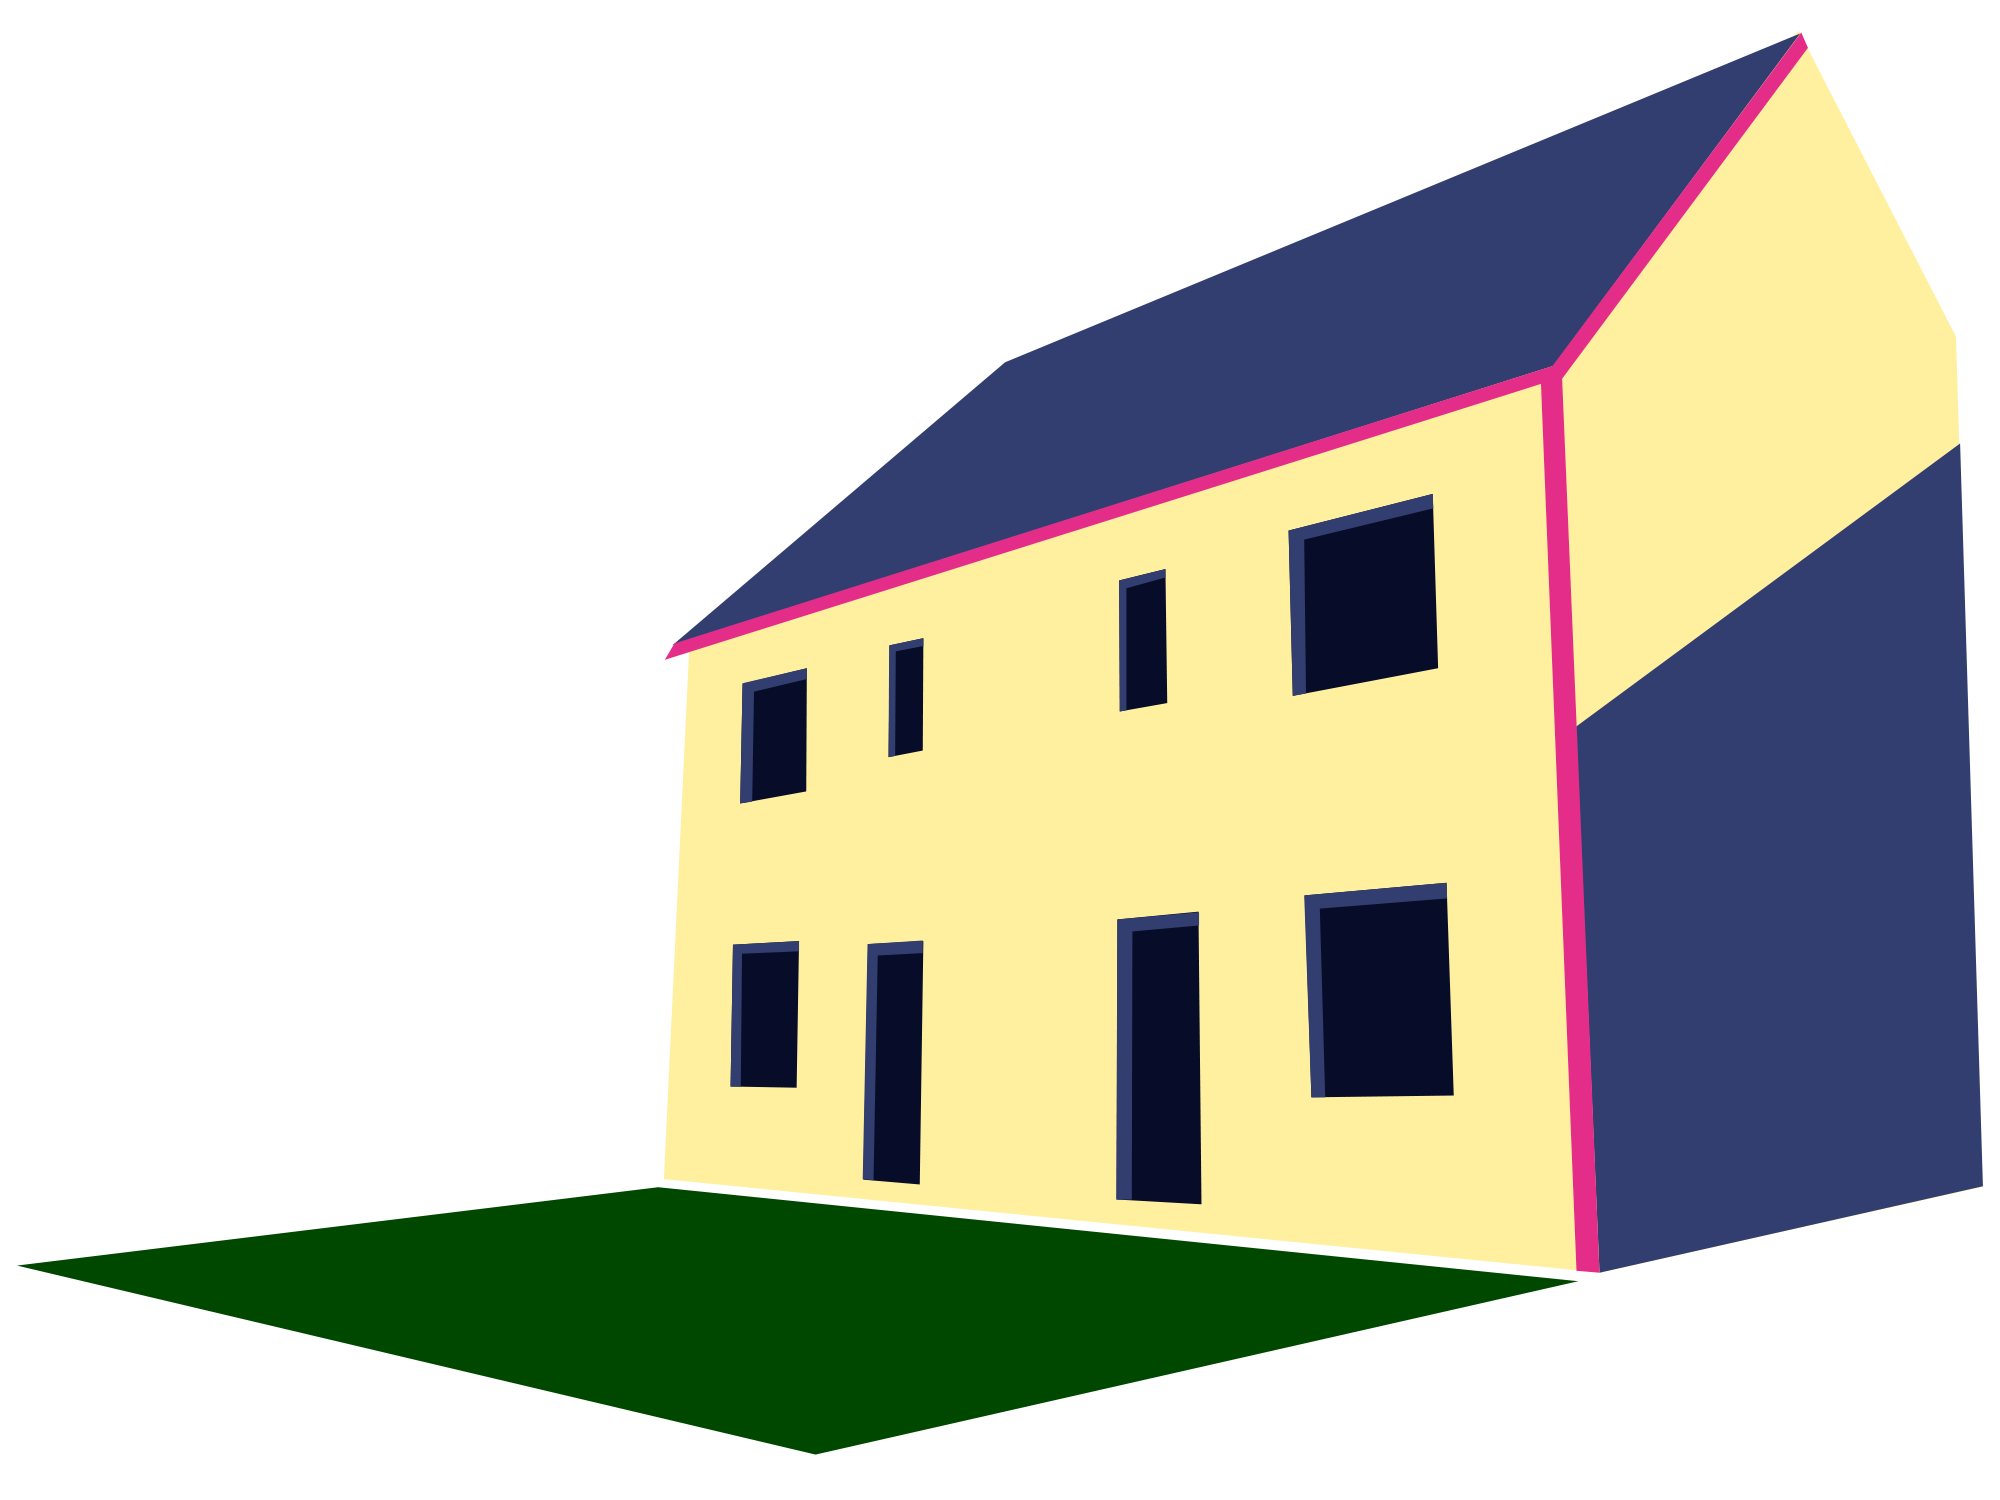 Vector house illustration